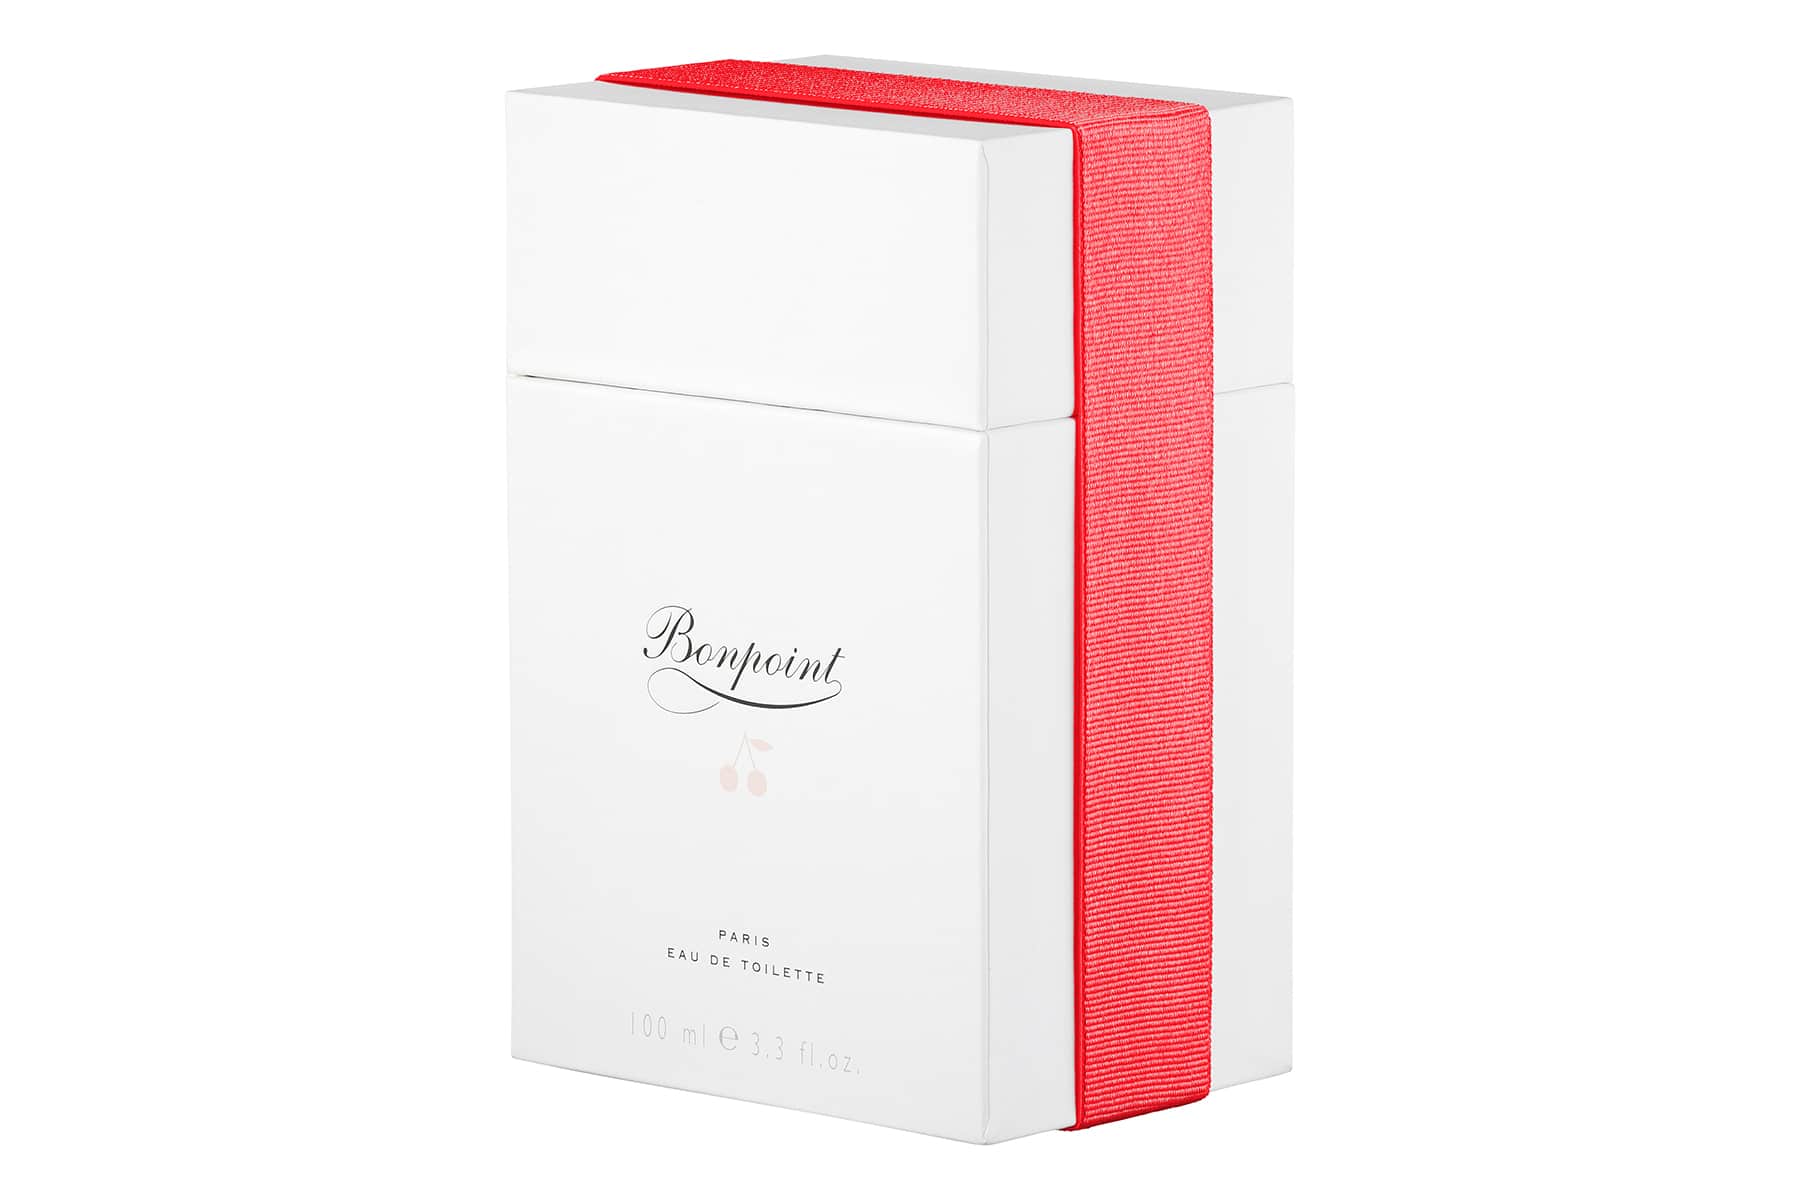 Packshot Parfum : Packaging Bonpoint